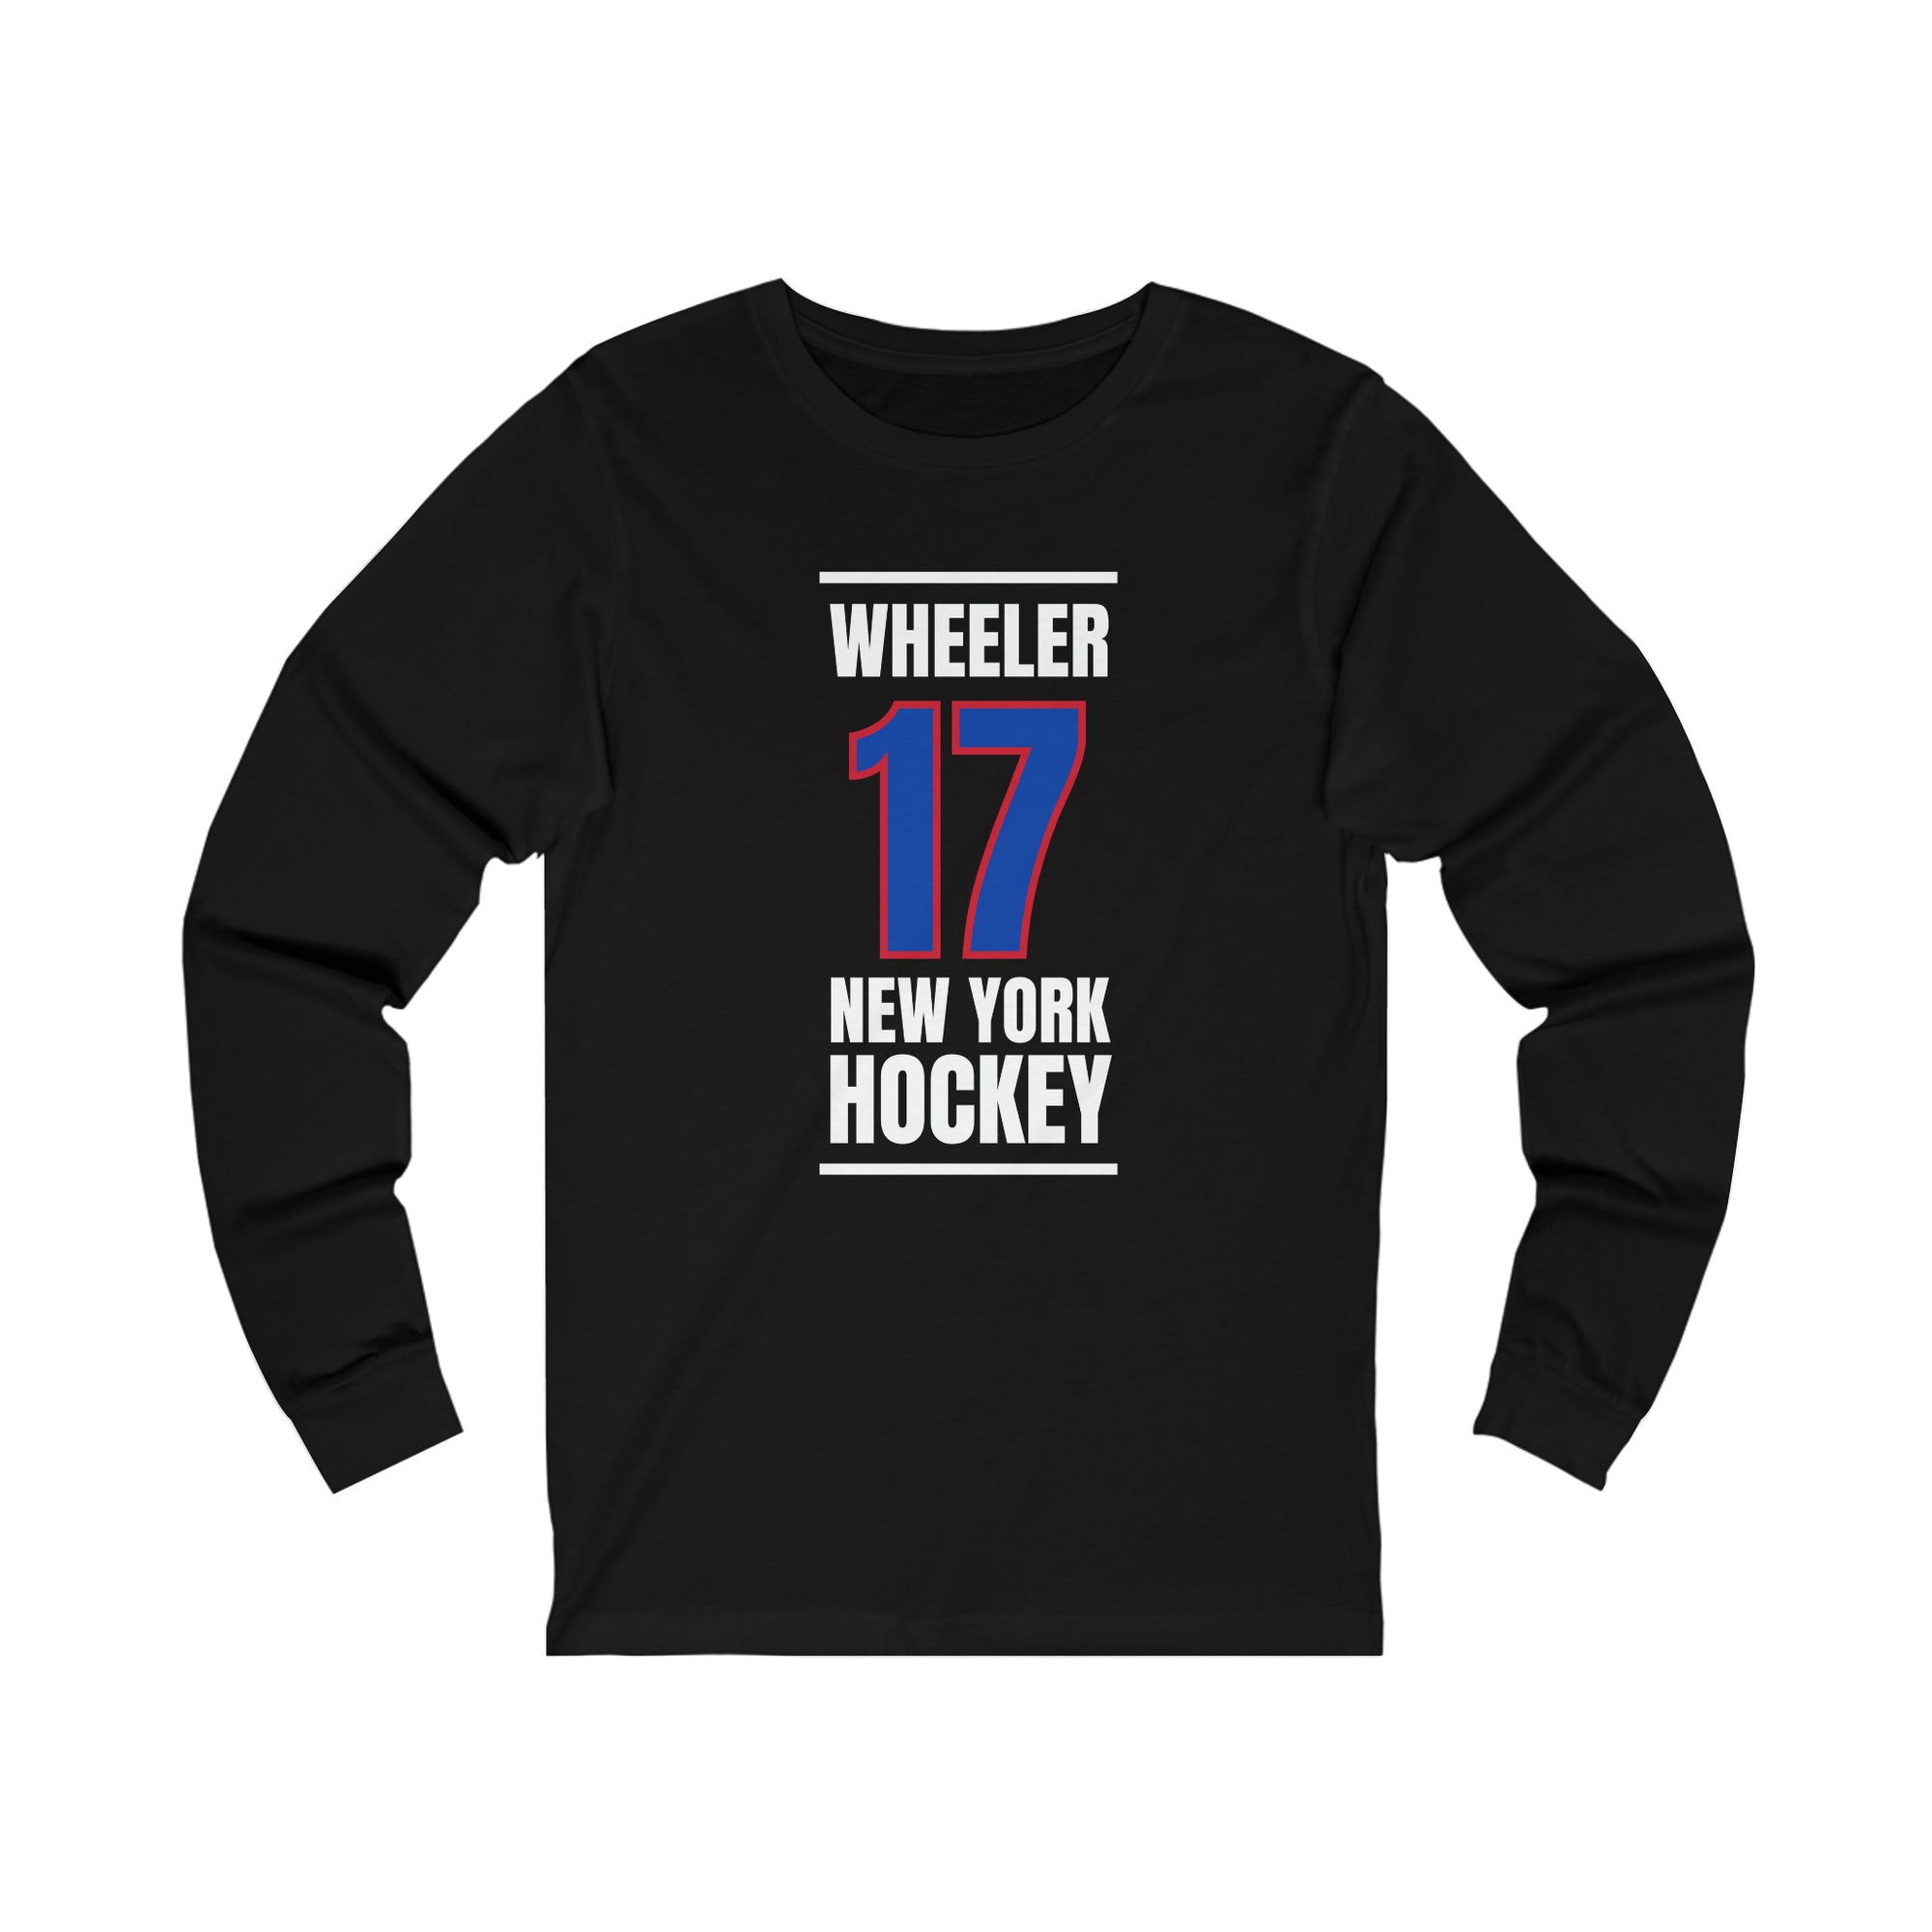 Wheeler 17 New York Hockey Royal Blue Vertical Design Unisex Jersey Long Sleeve Shirt